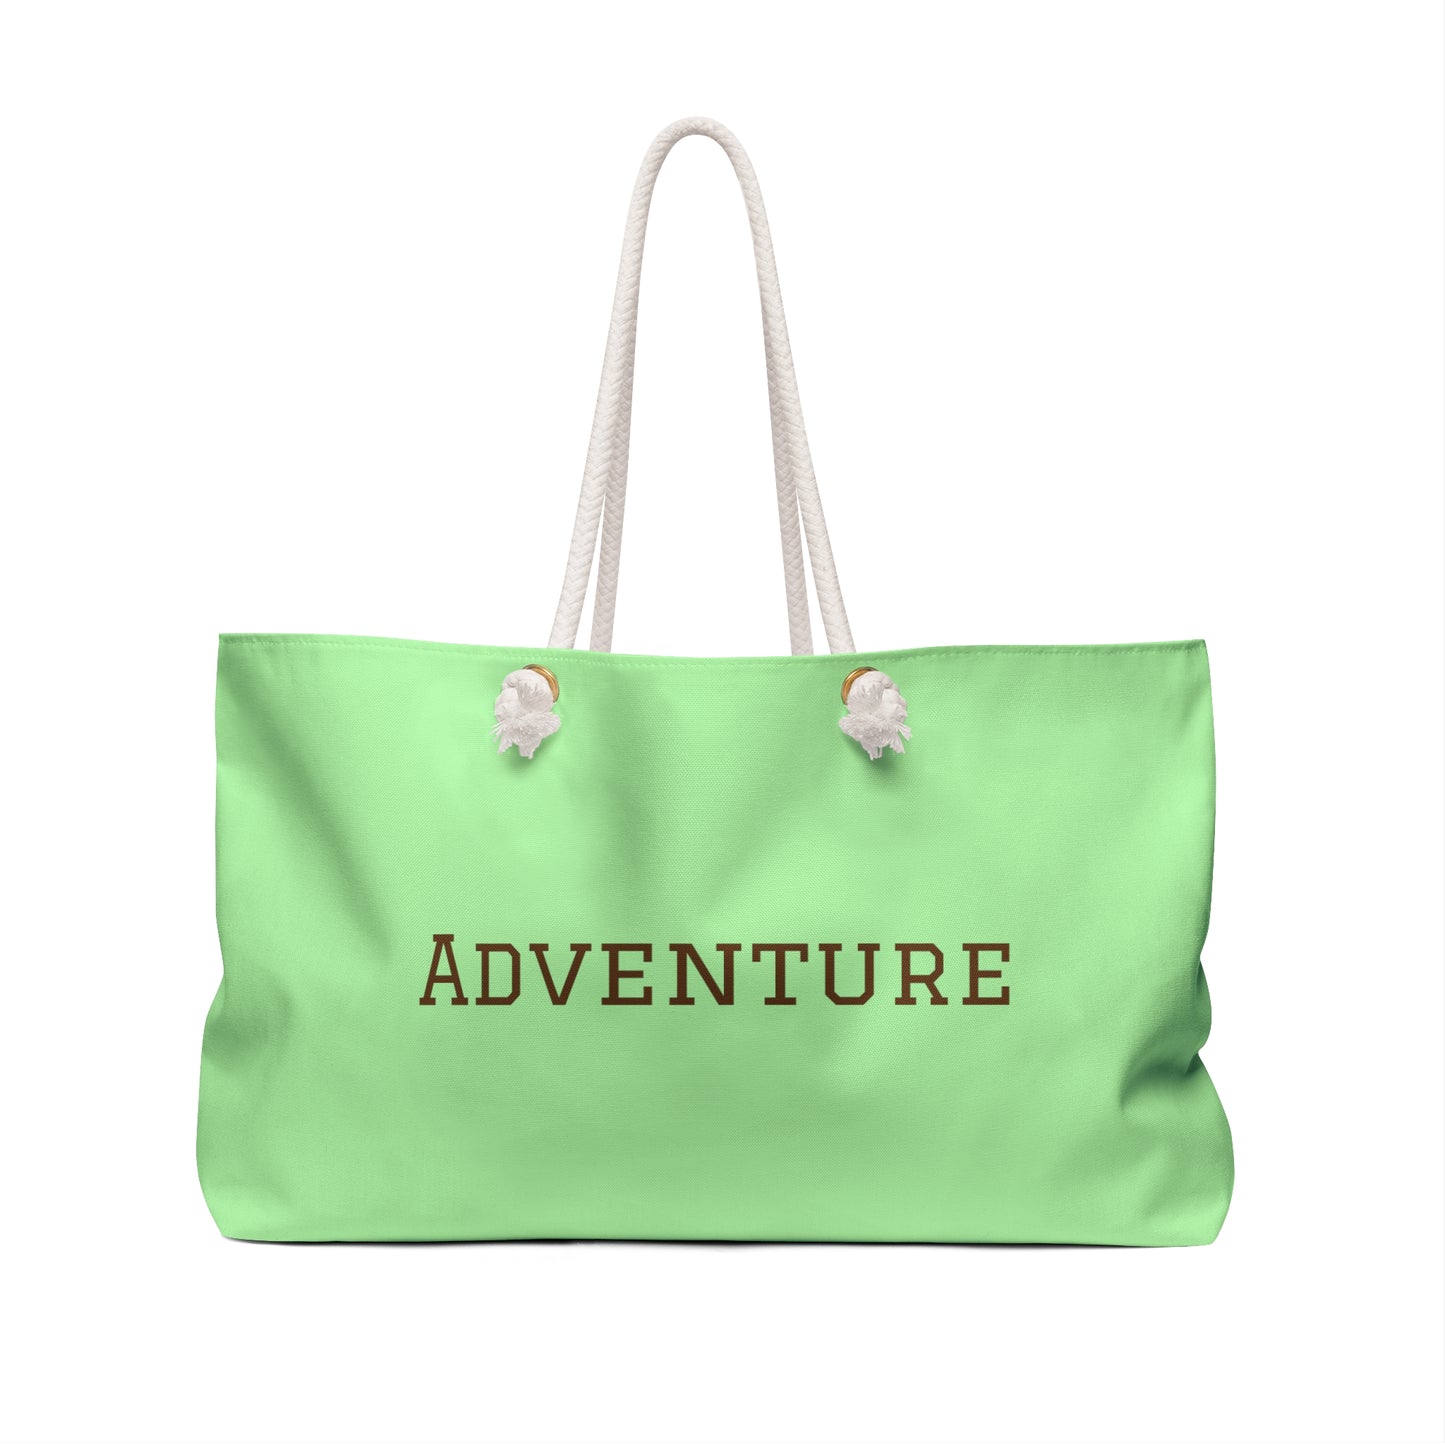 Sage Adventure Together We Ride Weekender Bag